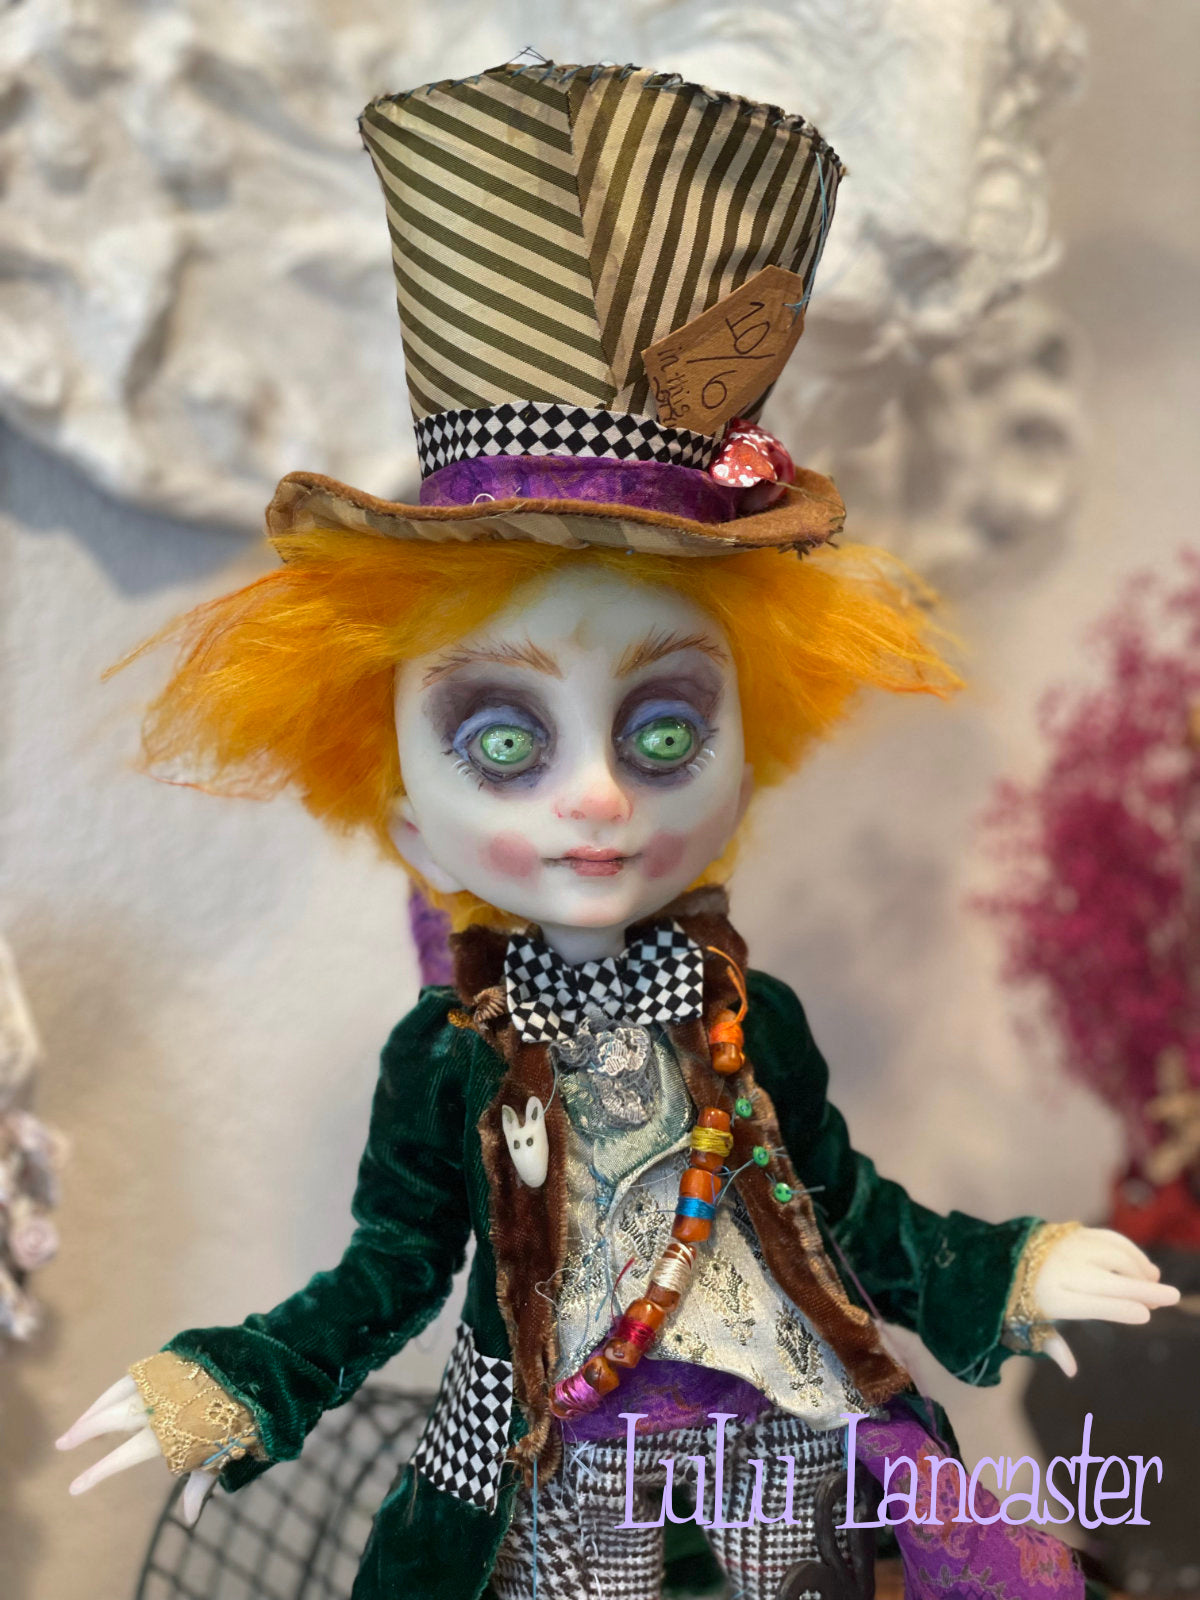 Hatter in LuLu's Wonderland Original LuLu Lancaster Art Doll